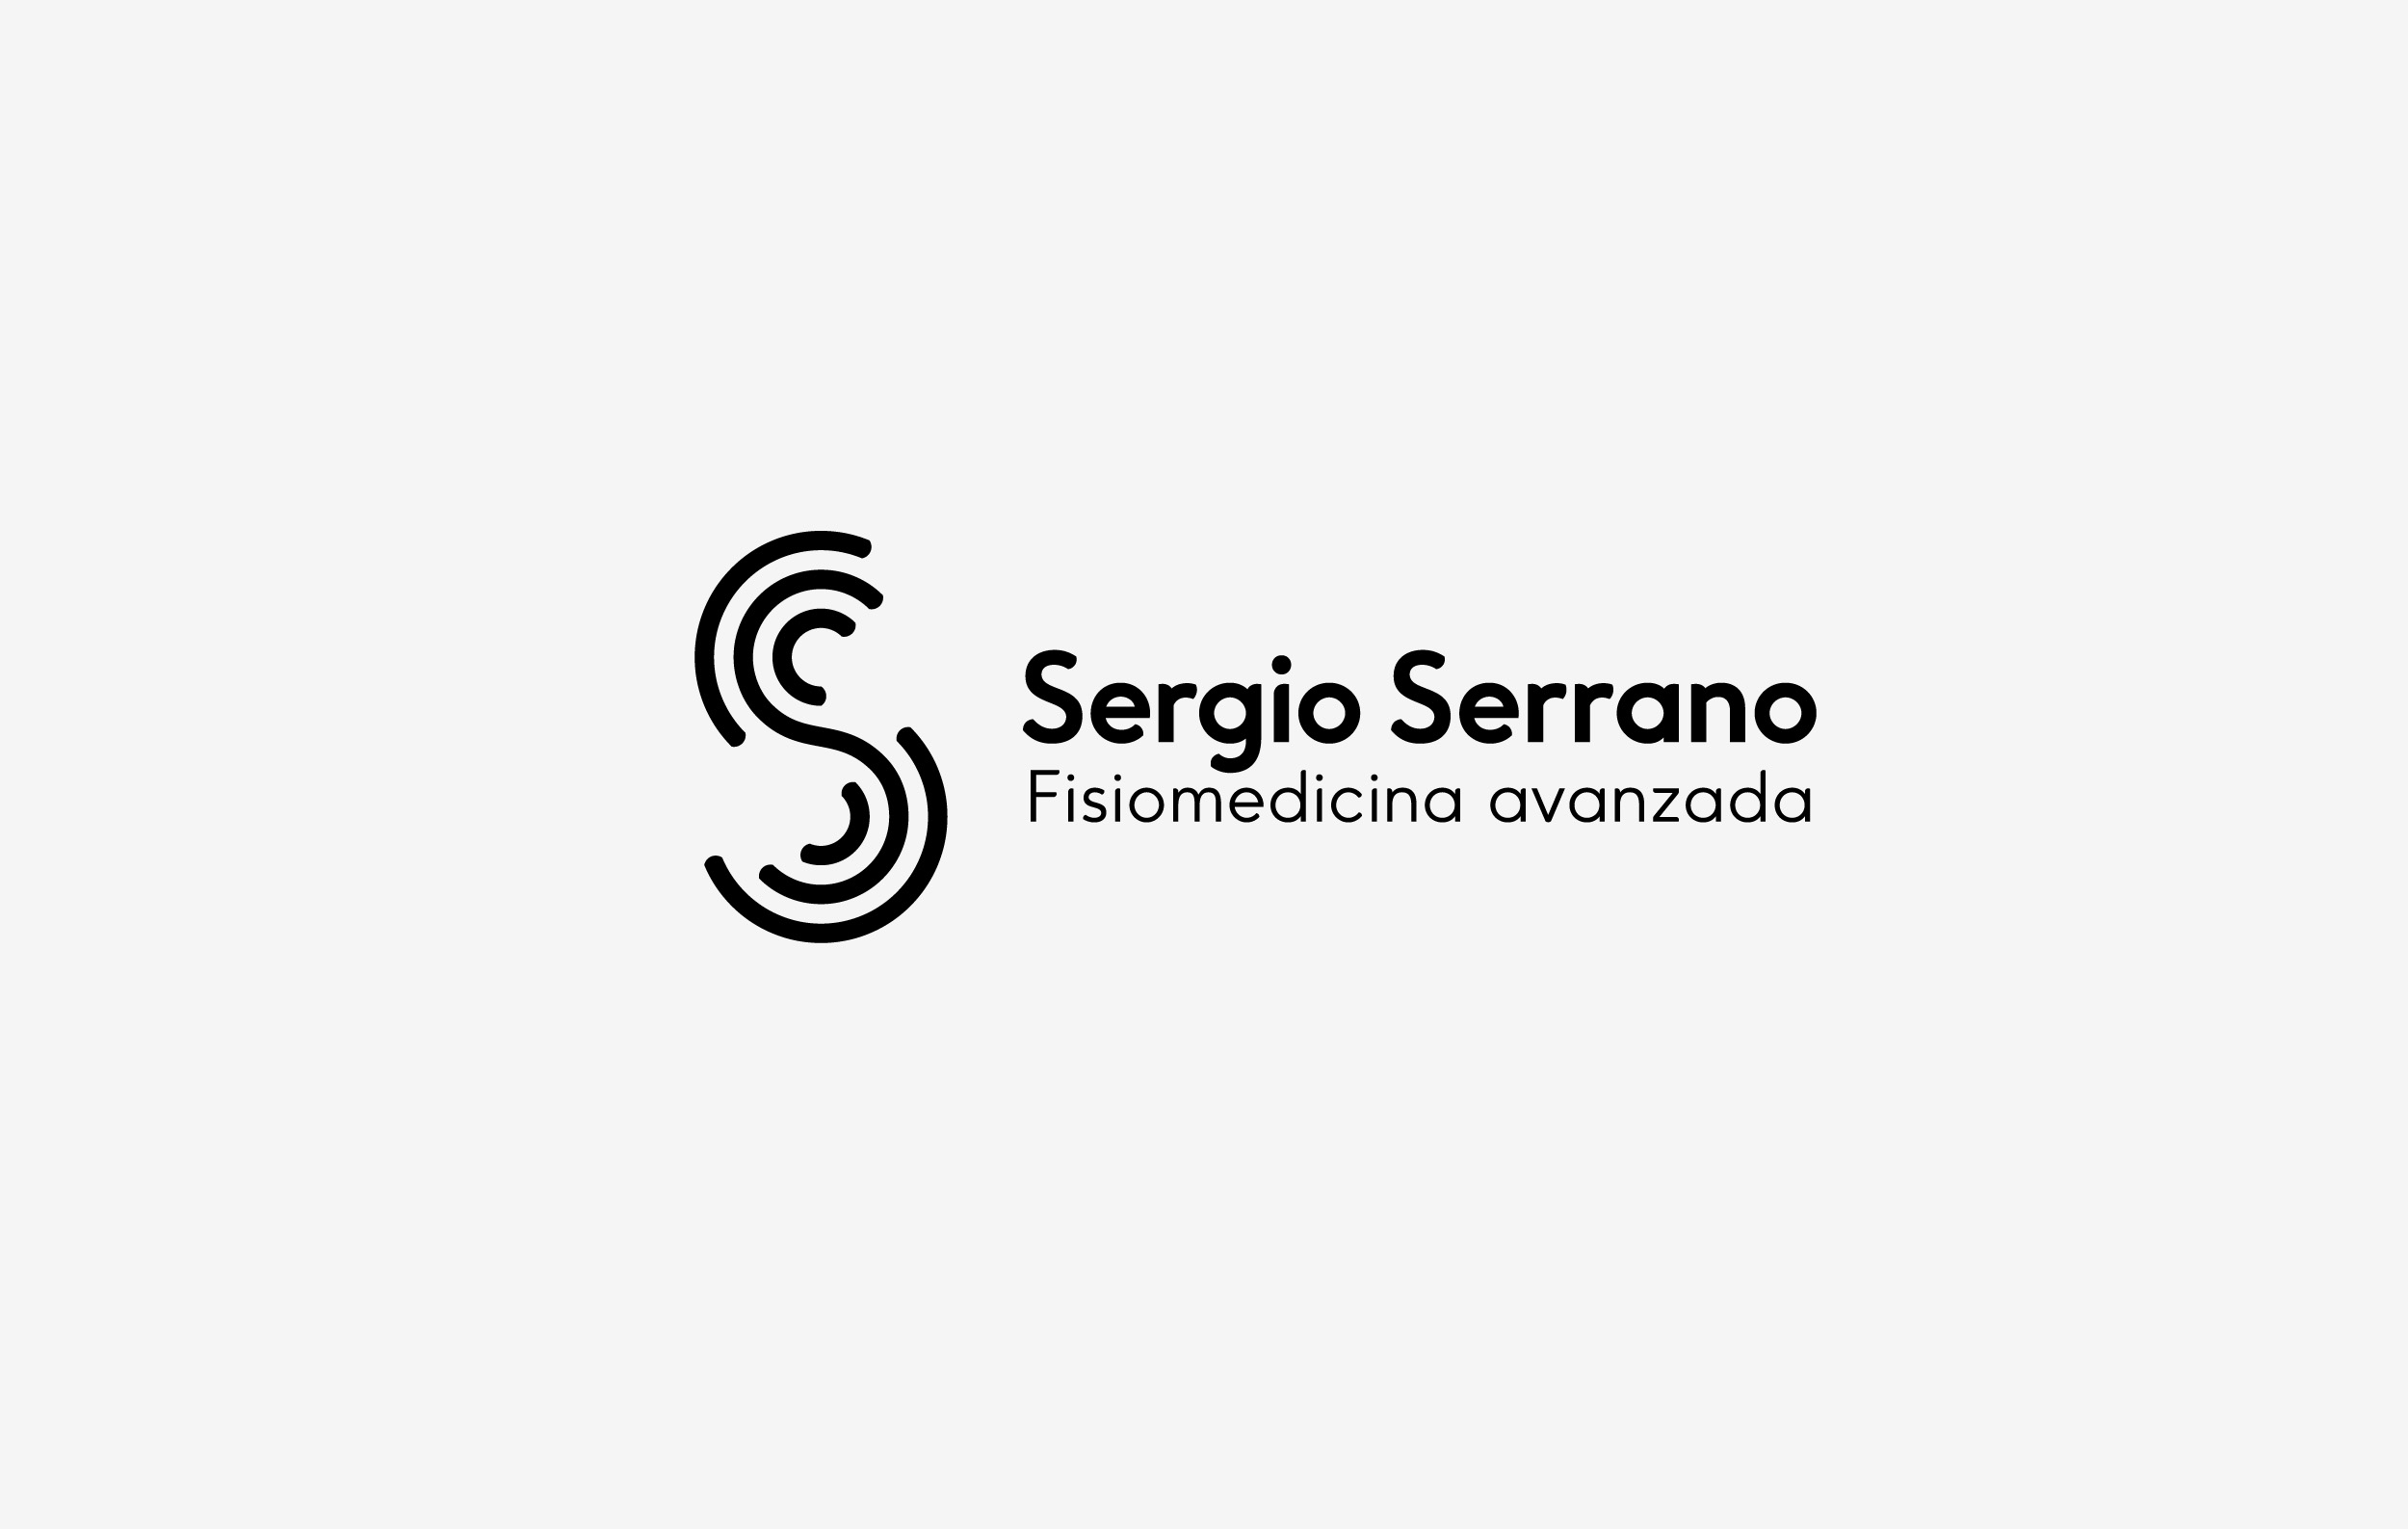 SS_Logo